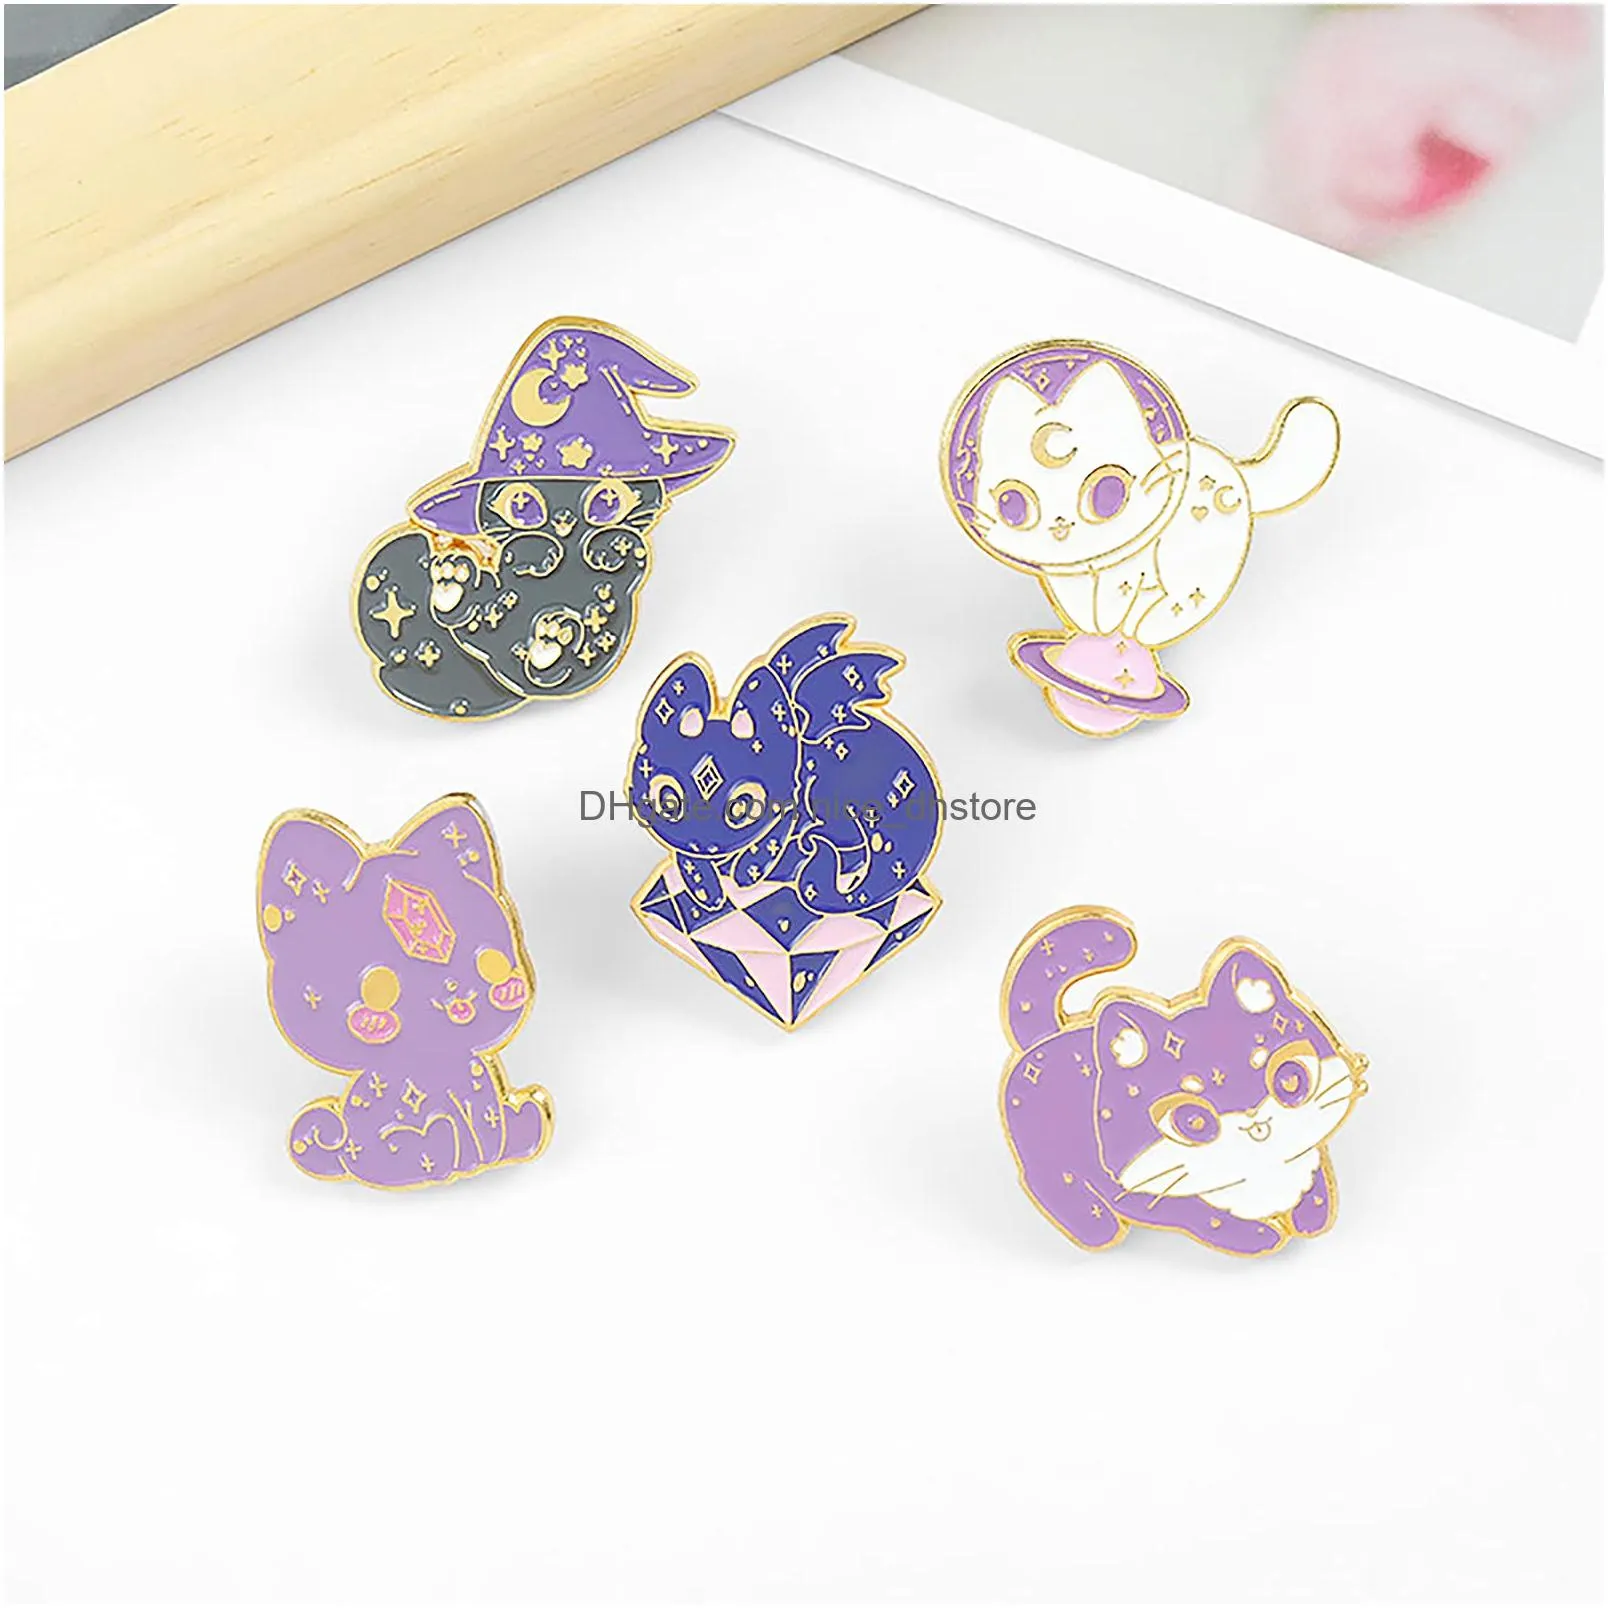 cute enamel brooch pins-purple cats shape novelty cartoon cute enamel brooch pins for backpacks set badges clothing bags jackets